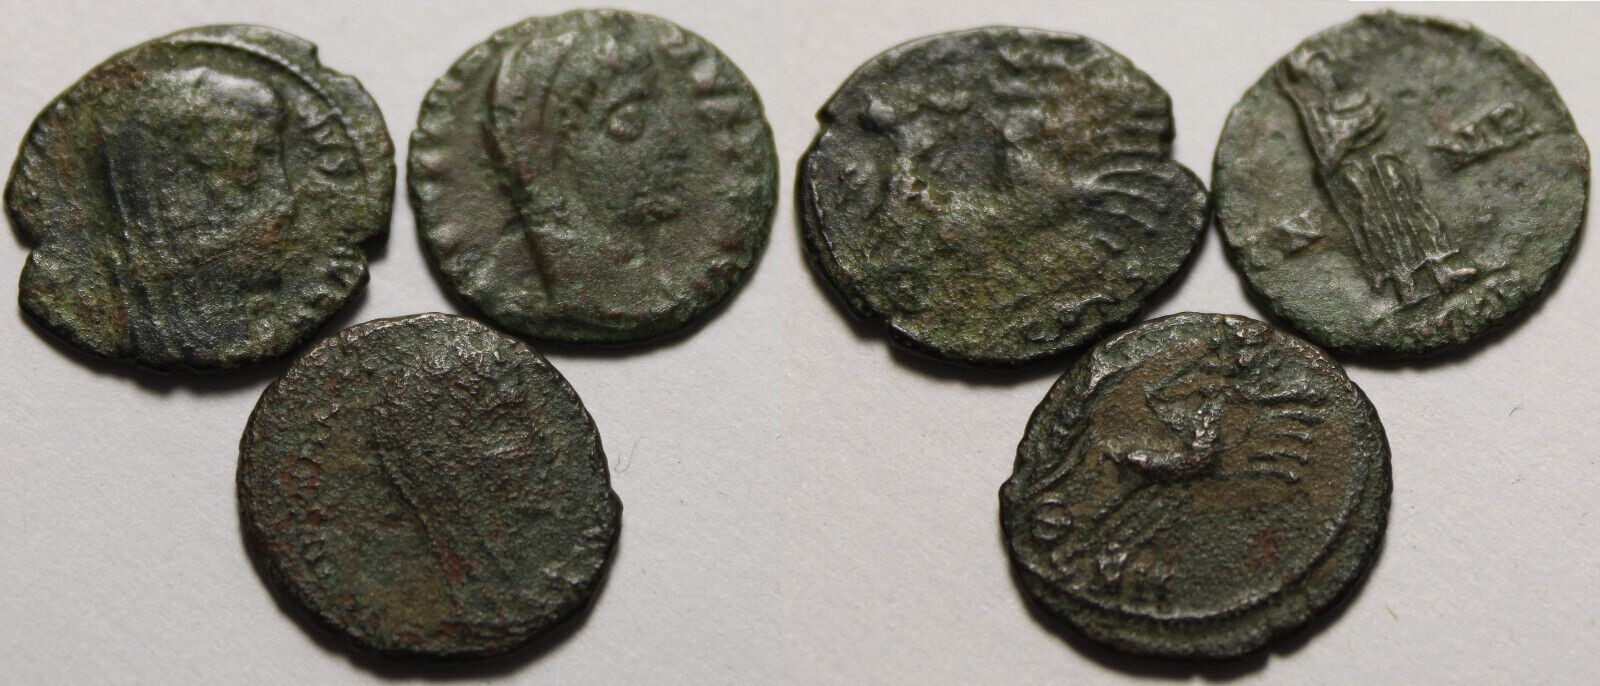 Lot genuine Ancient Roman coins veiled Constantine Victory quadriga hand of God Без бренда